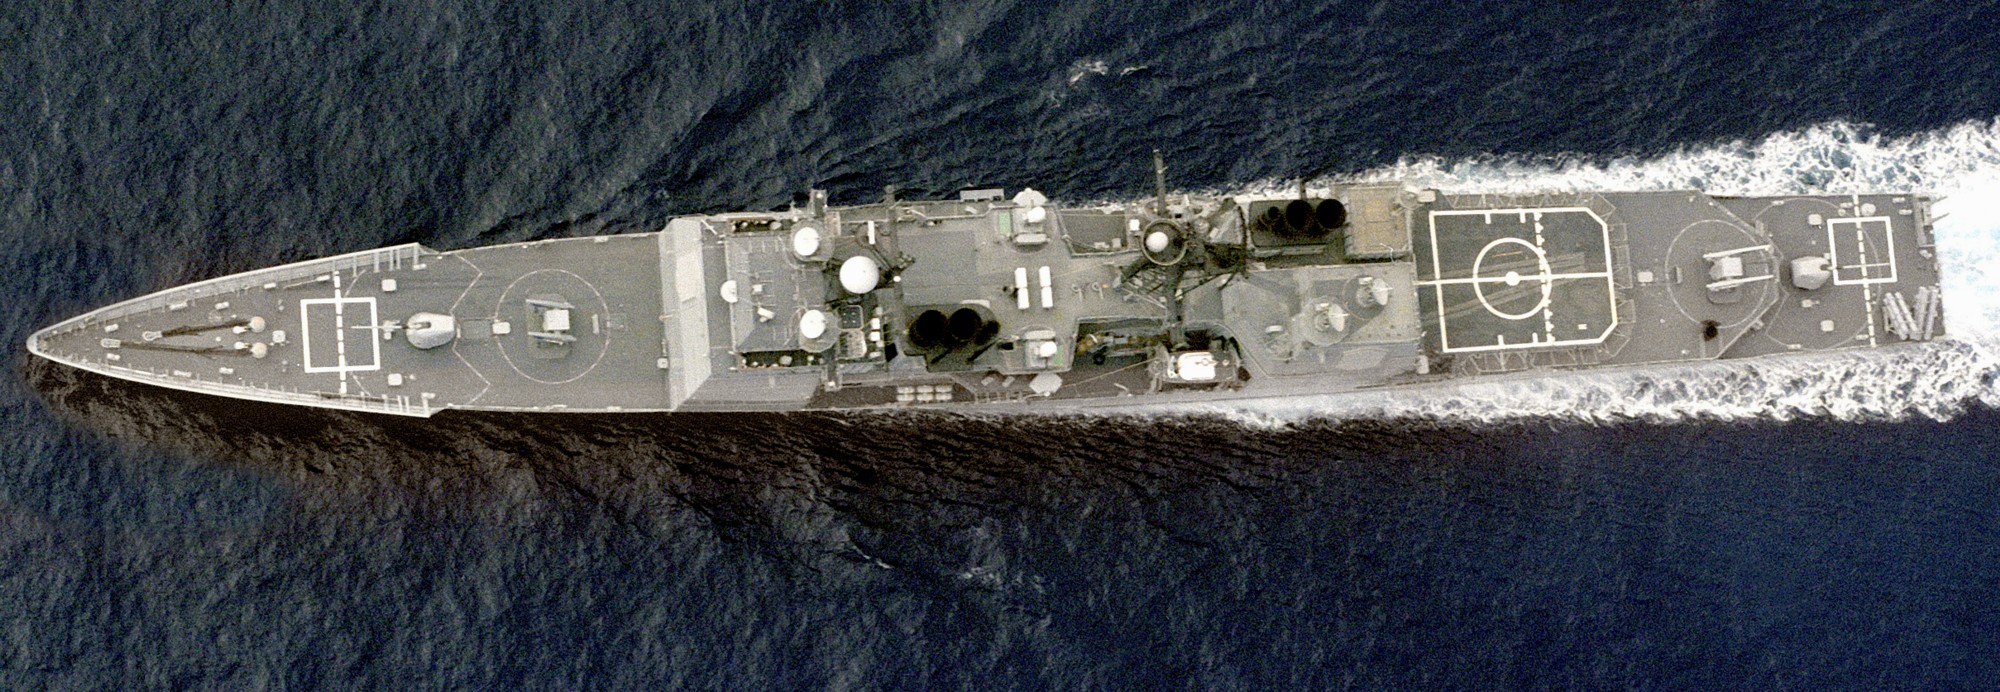 cg-49 uss vincennes ticonderoga class guided missile cruiser aegis us navy 56